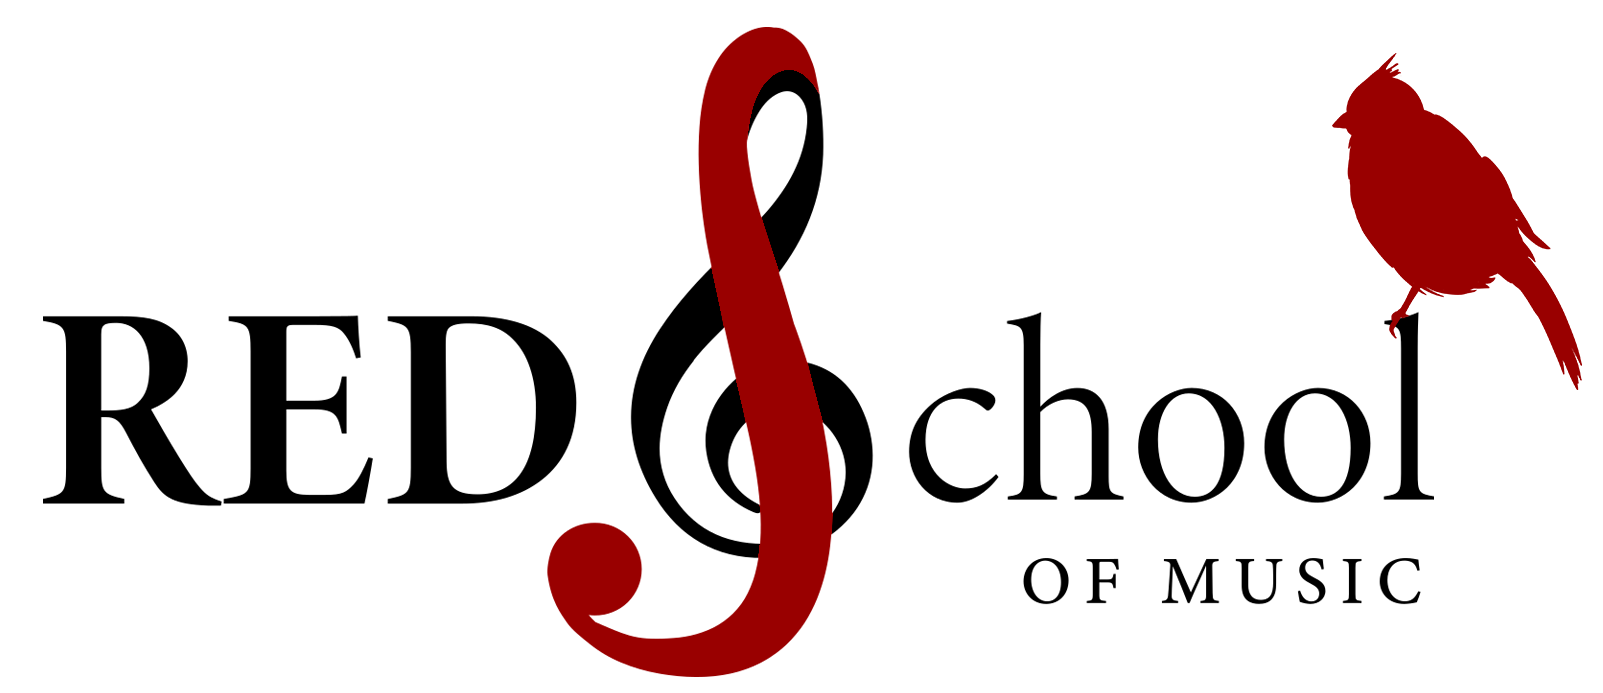 Red School of Music logo